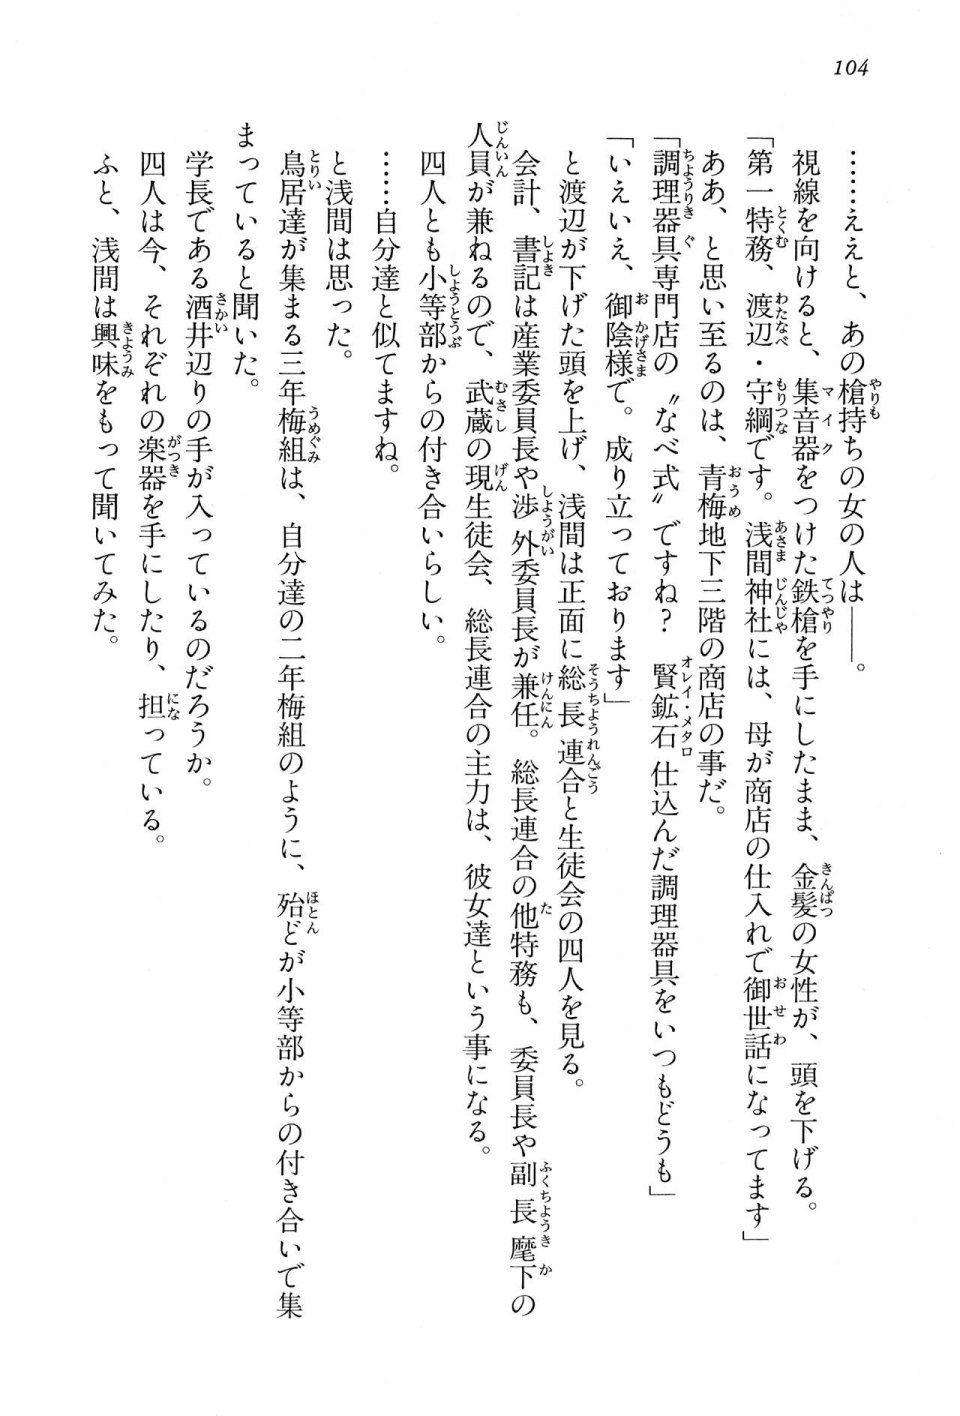 Kyoukai Senjou no Horizon BD Special Mininovel Vol 1(1A) - Photo #108